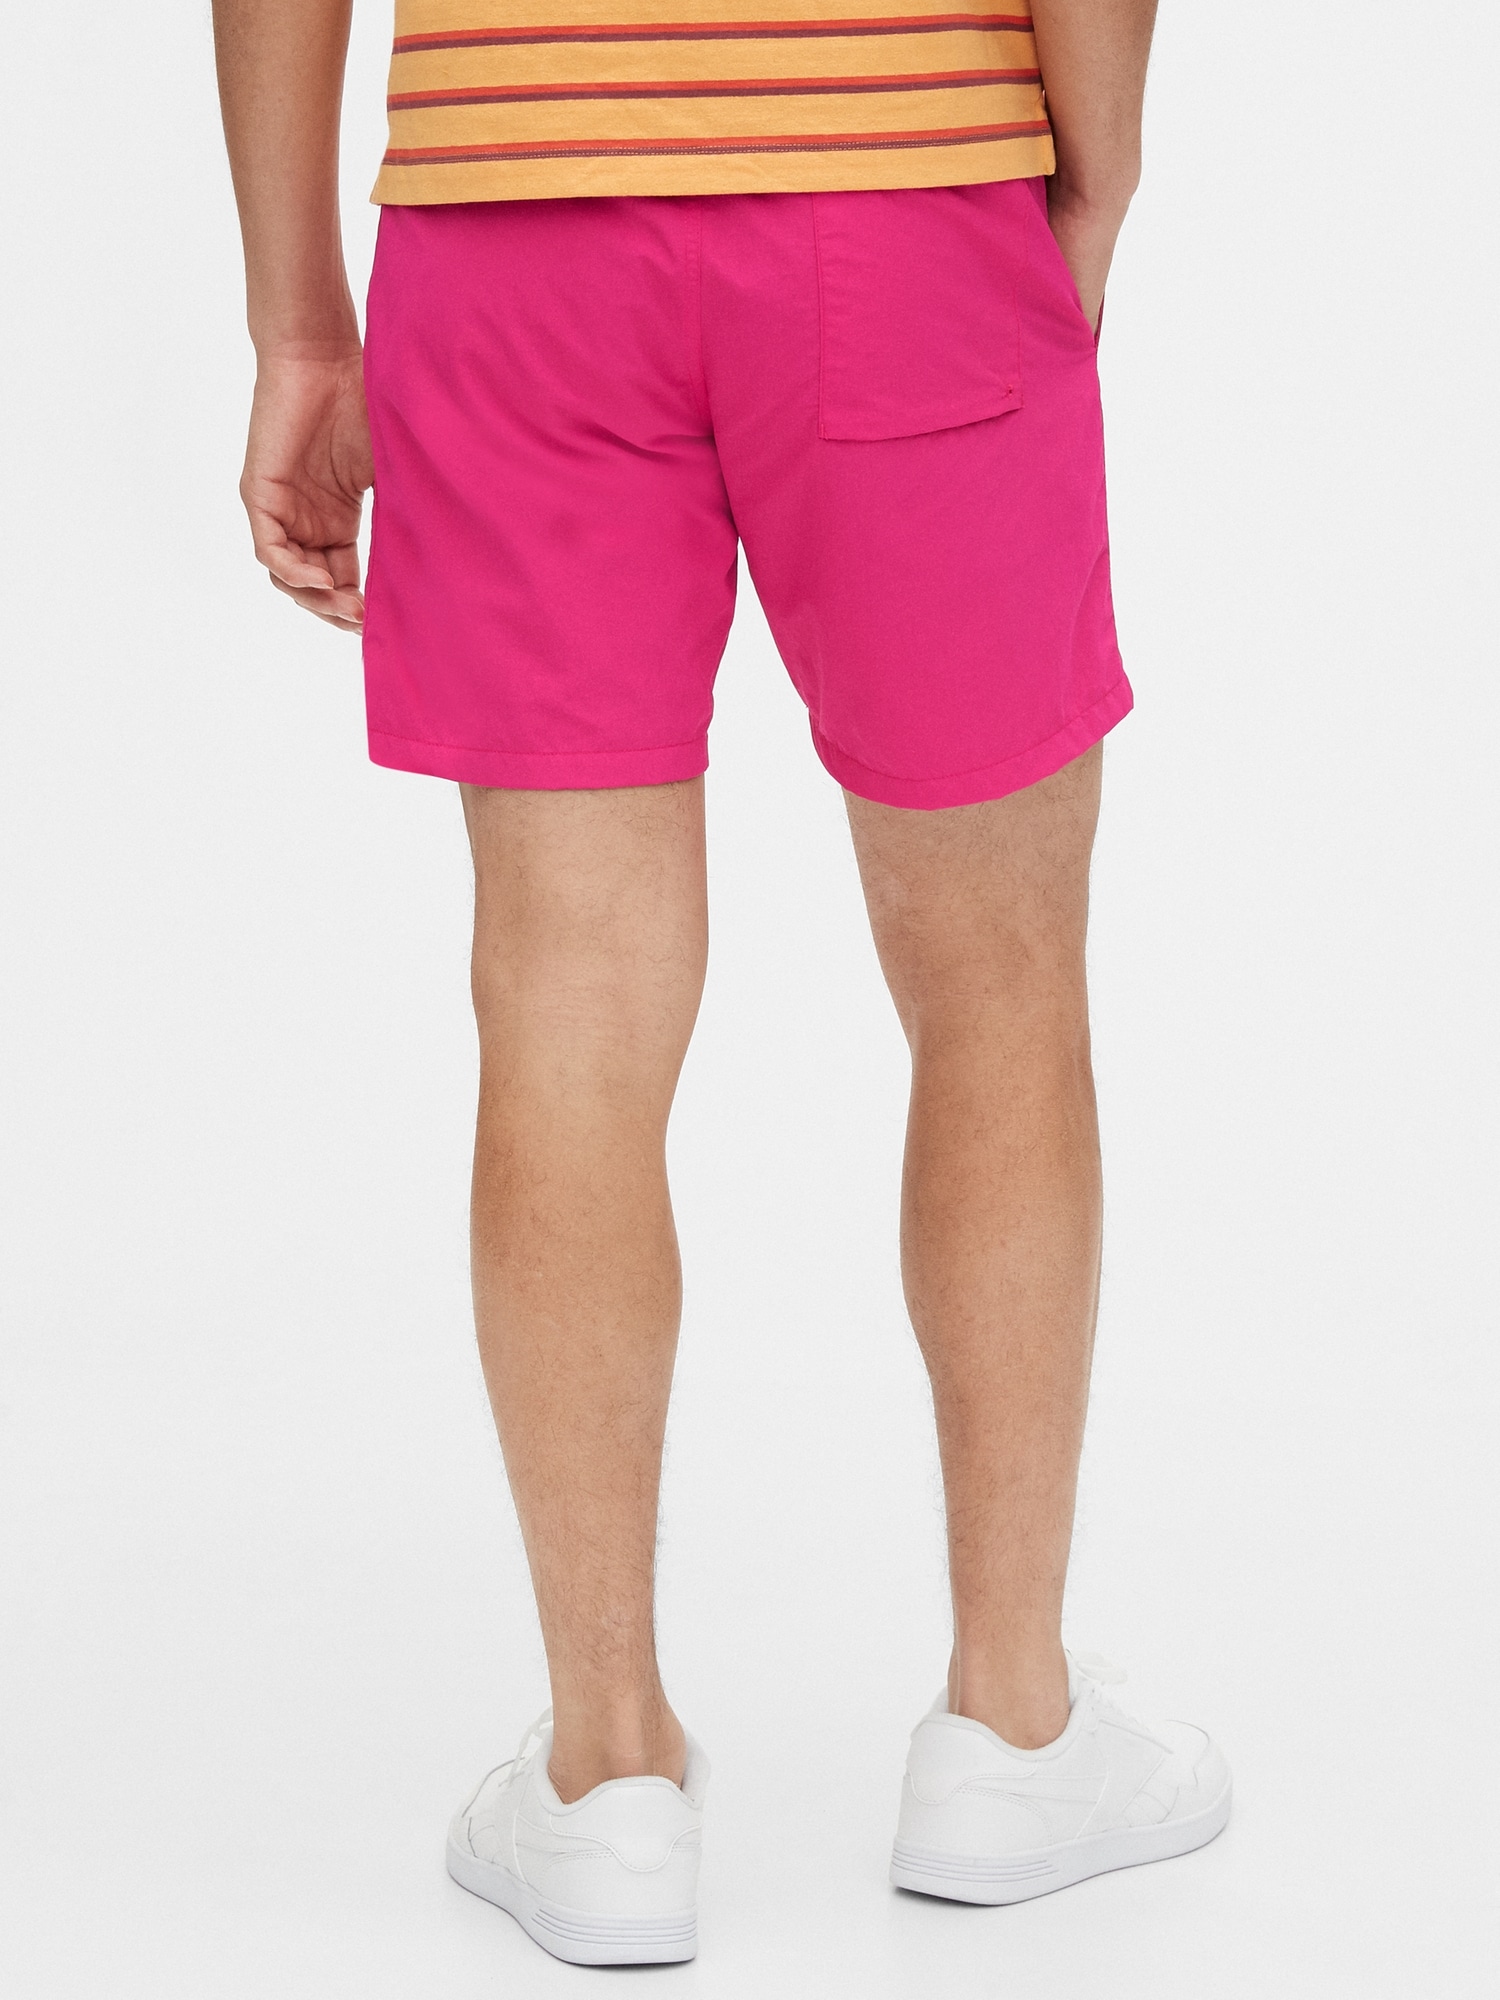 gap hybrid shorts